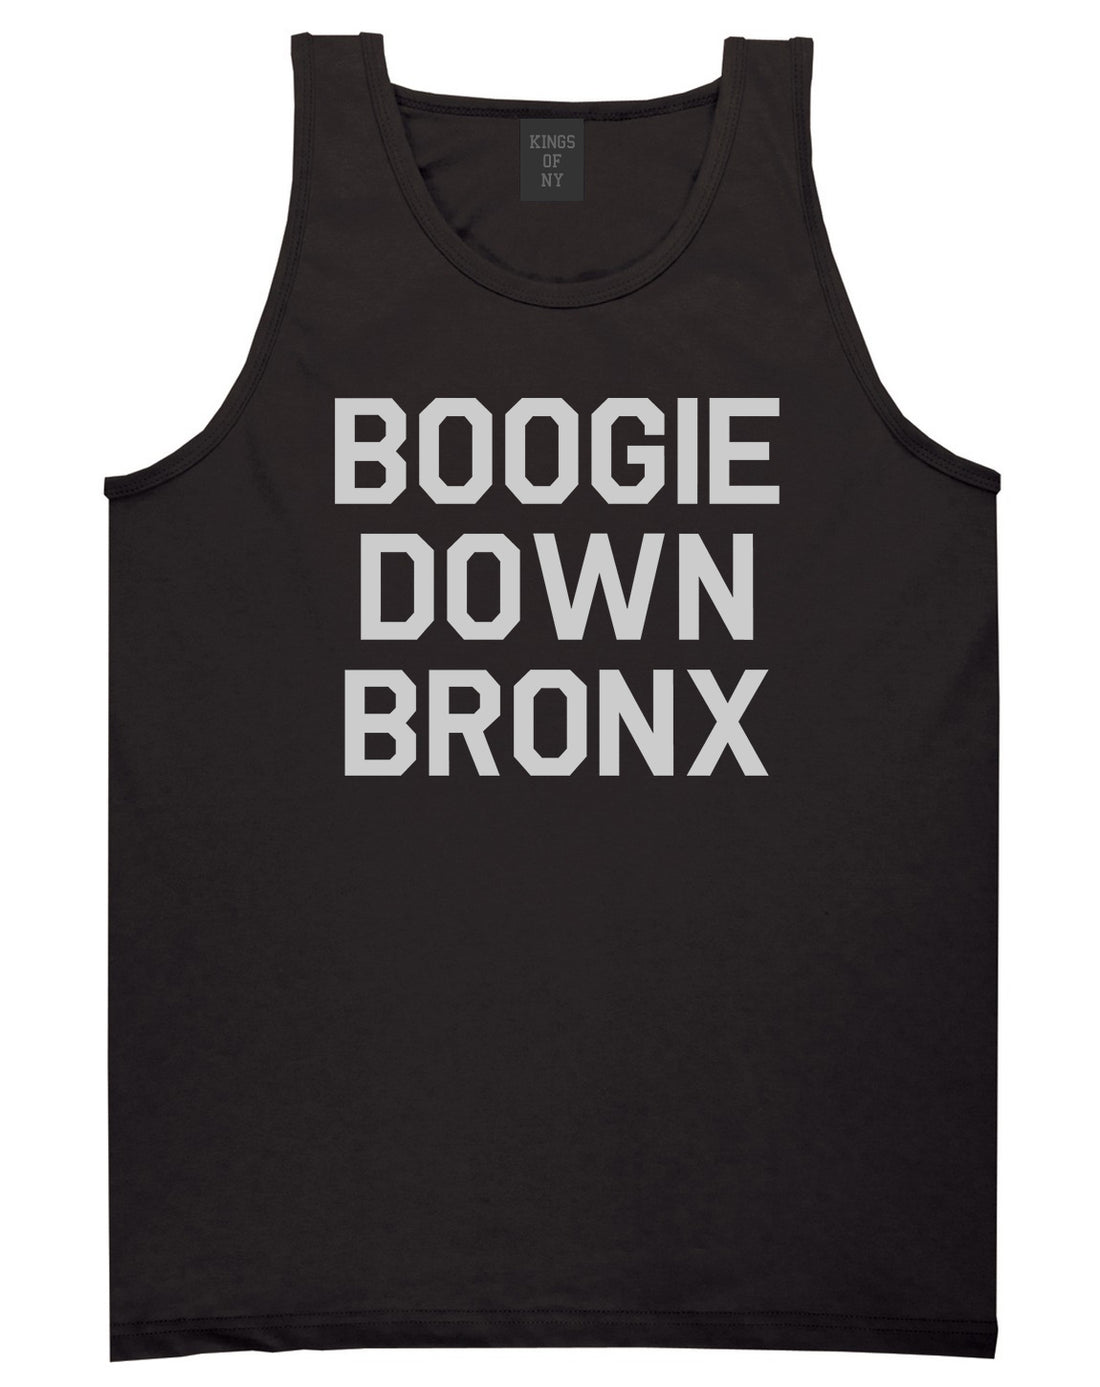 Boogie Down Bronx Mens Tank Top Shirt Black by Kings Of NY